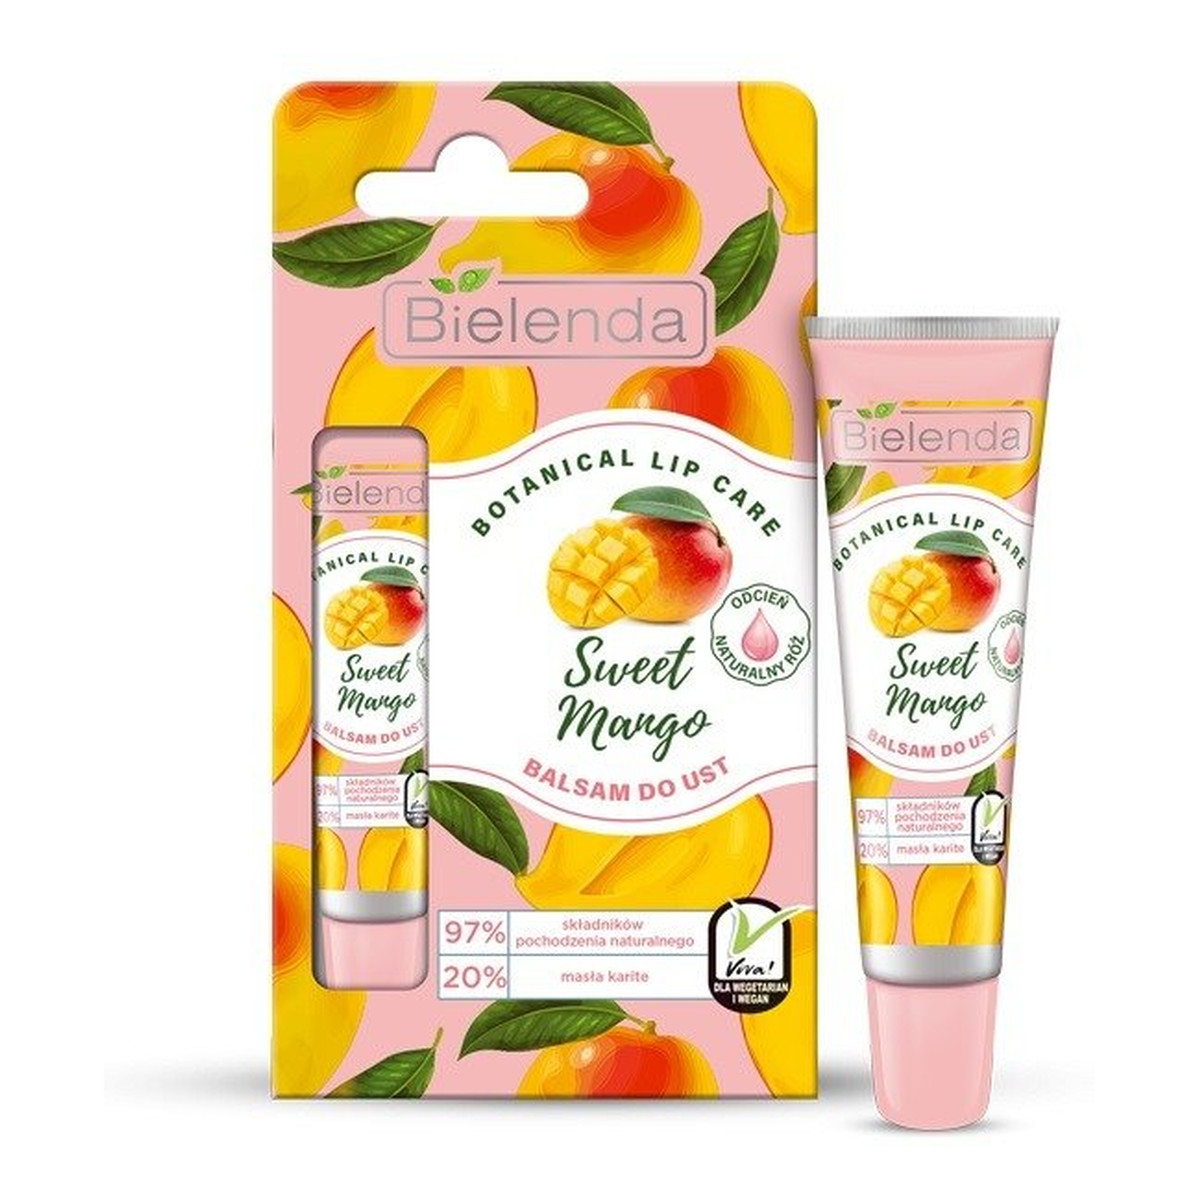 Bielenda Botanical Lip Care Balsam do ust Sweet Mango - naturalny róż 10g